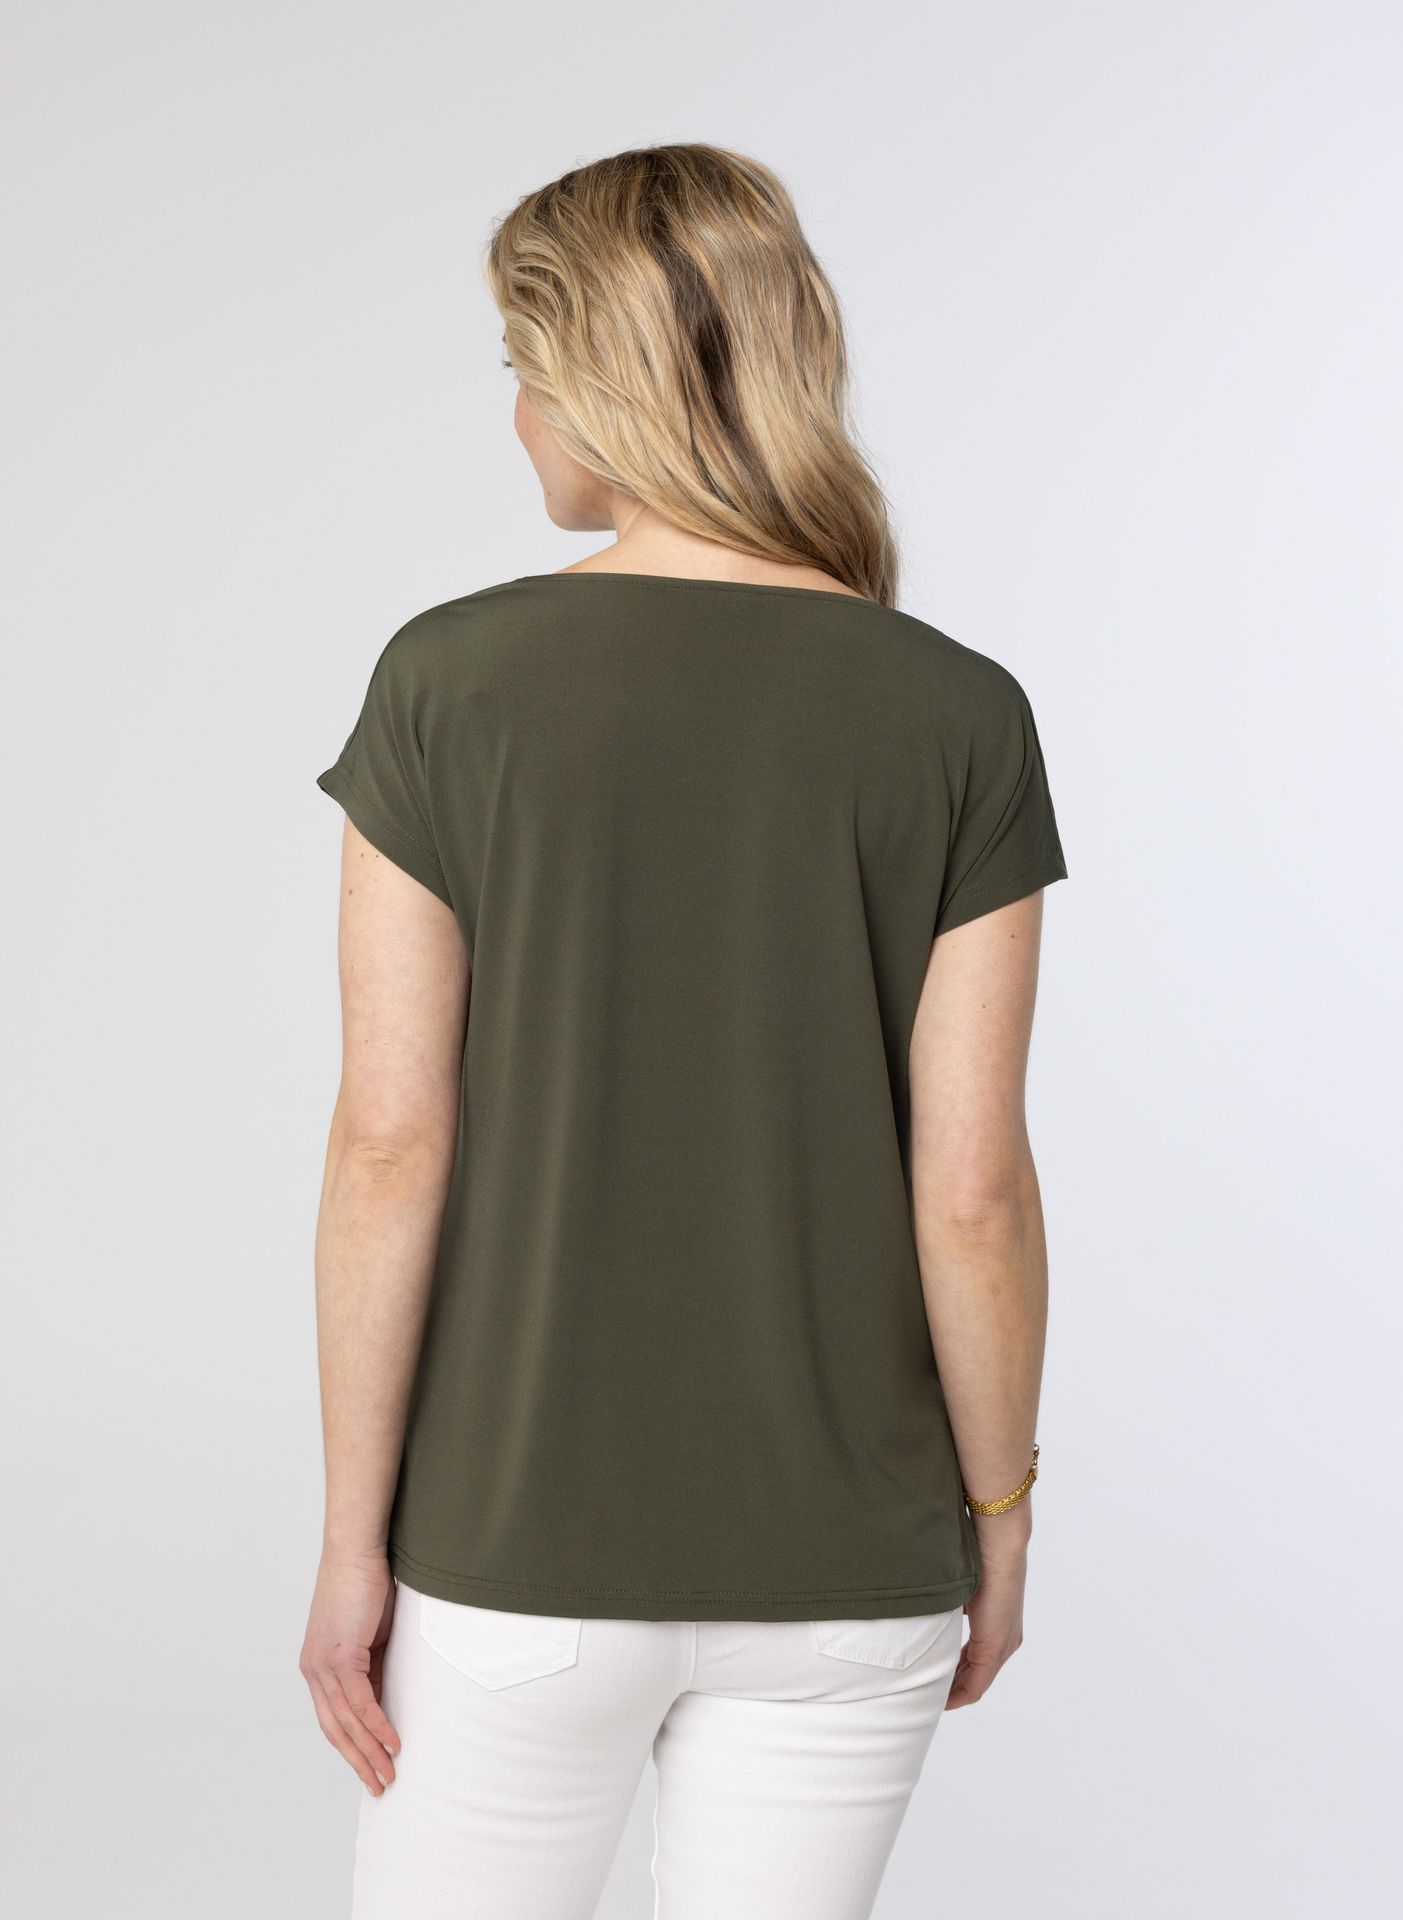 Norah Legergroen shirt met gedrapeerde hals dark army 209994-580